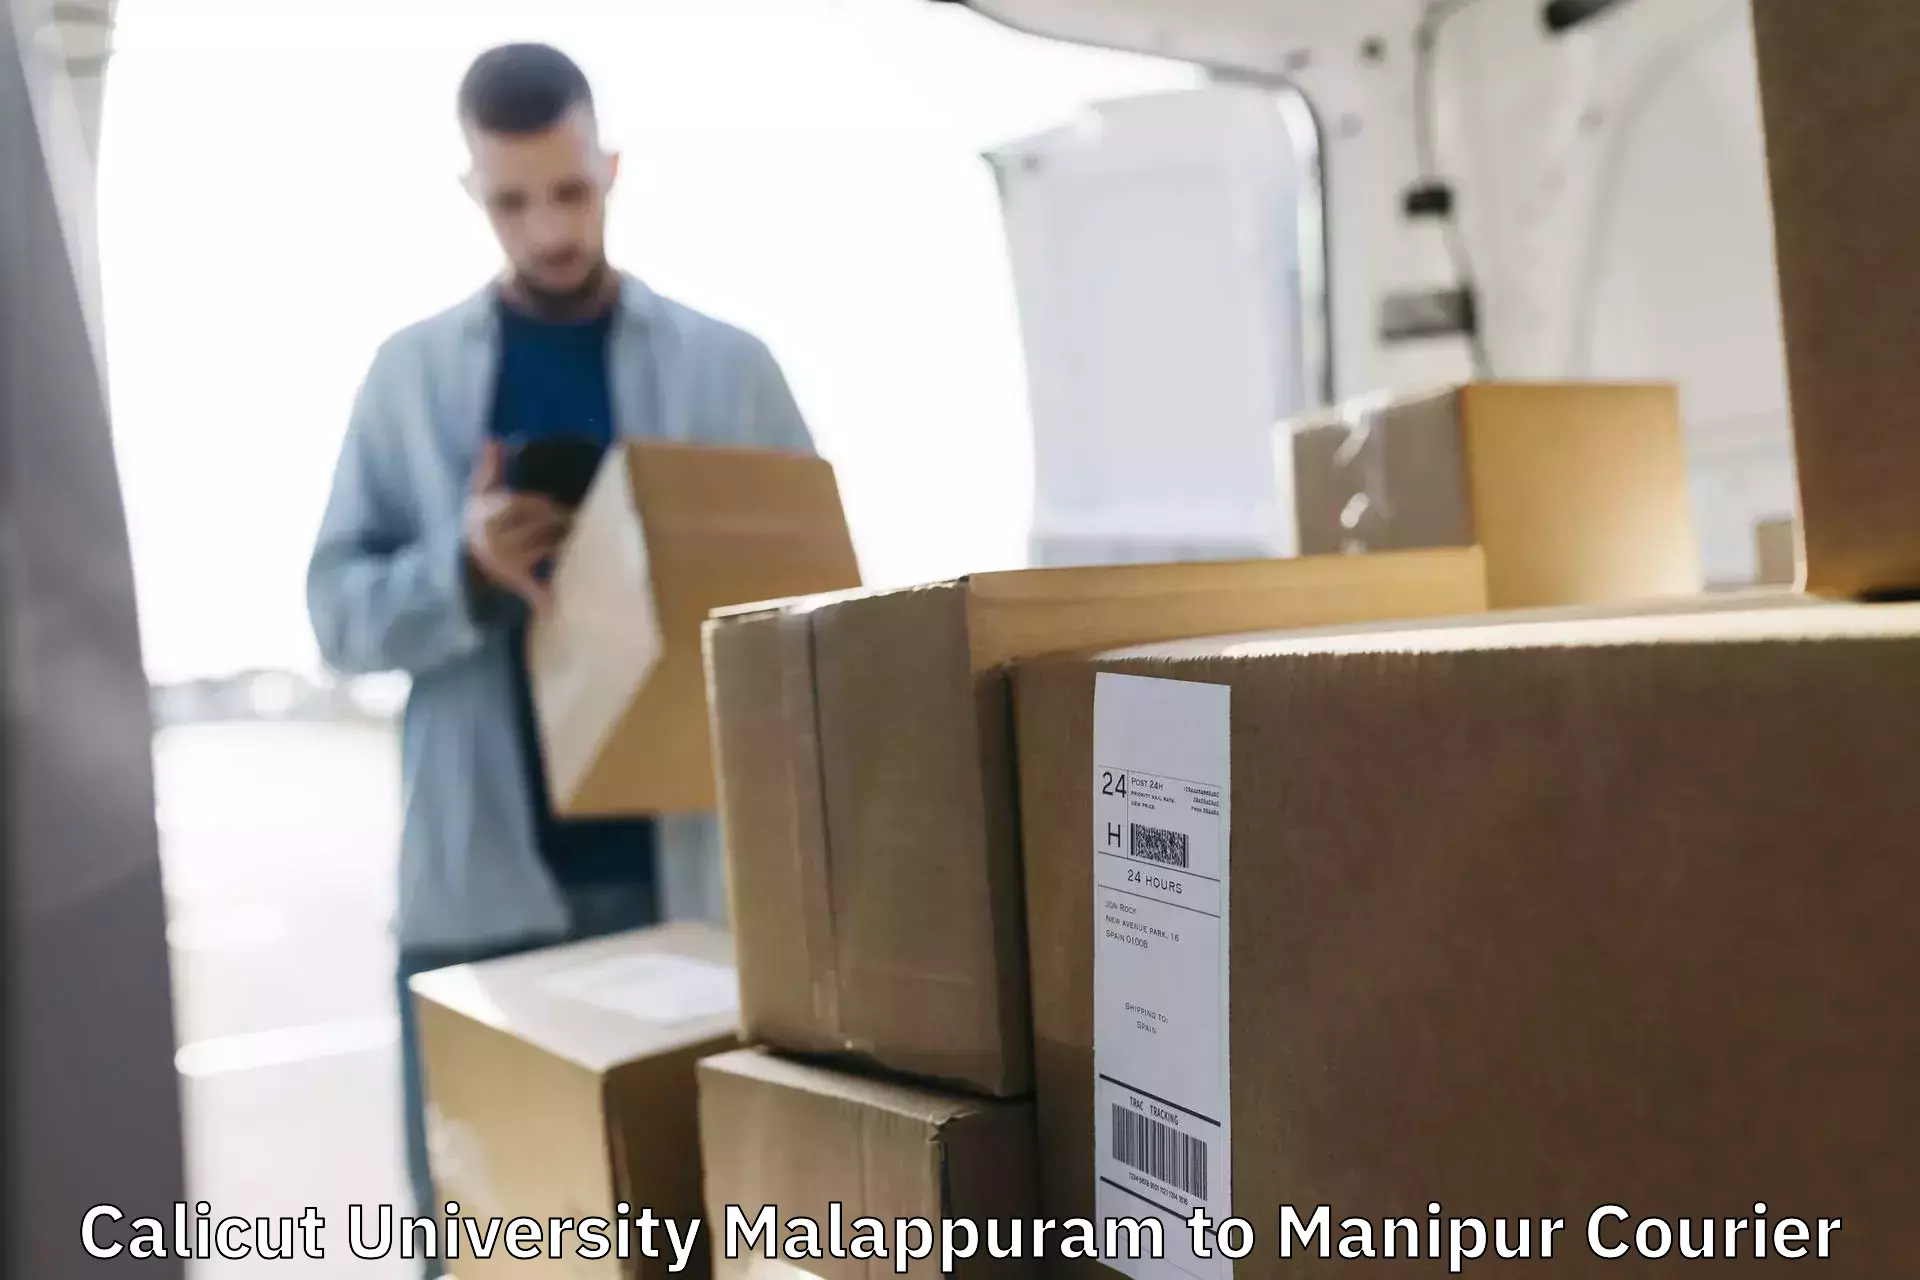 Cash on delivery service Calicut University Malappuram to Imphal